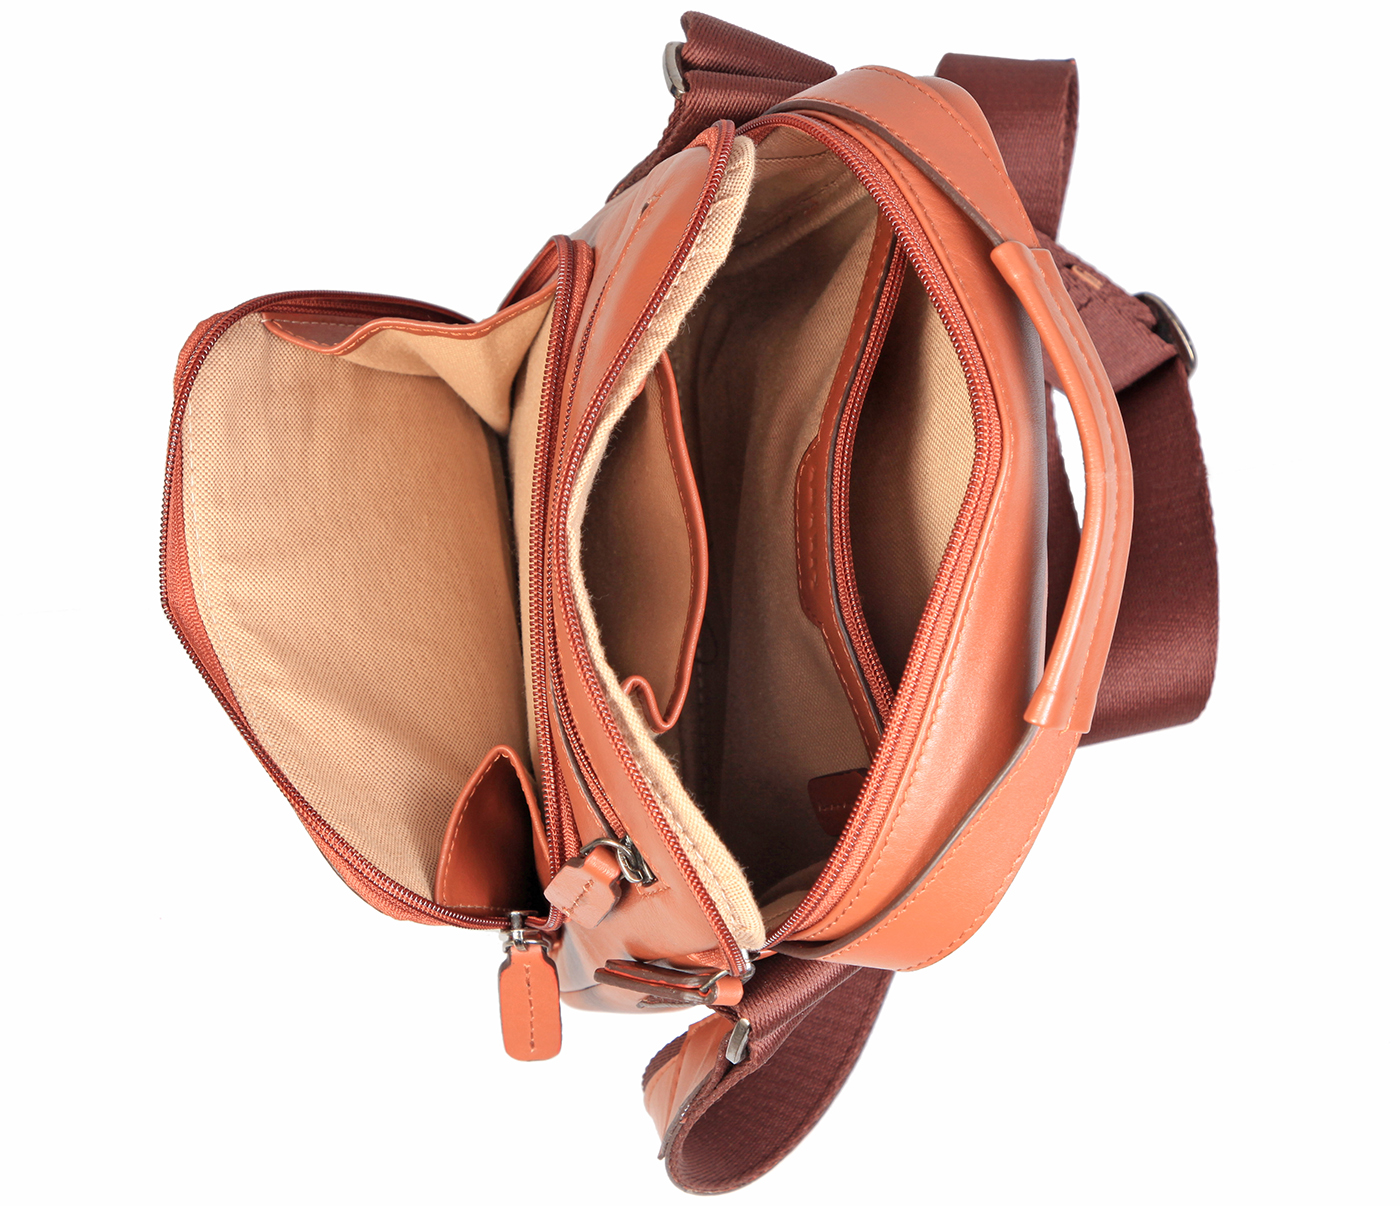 P38-Rafael-Men's travel pouch in Genuine Leather - Tan